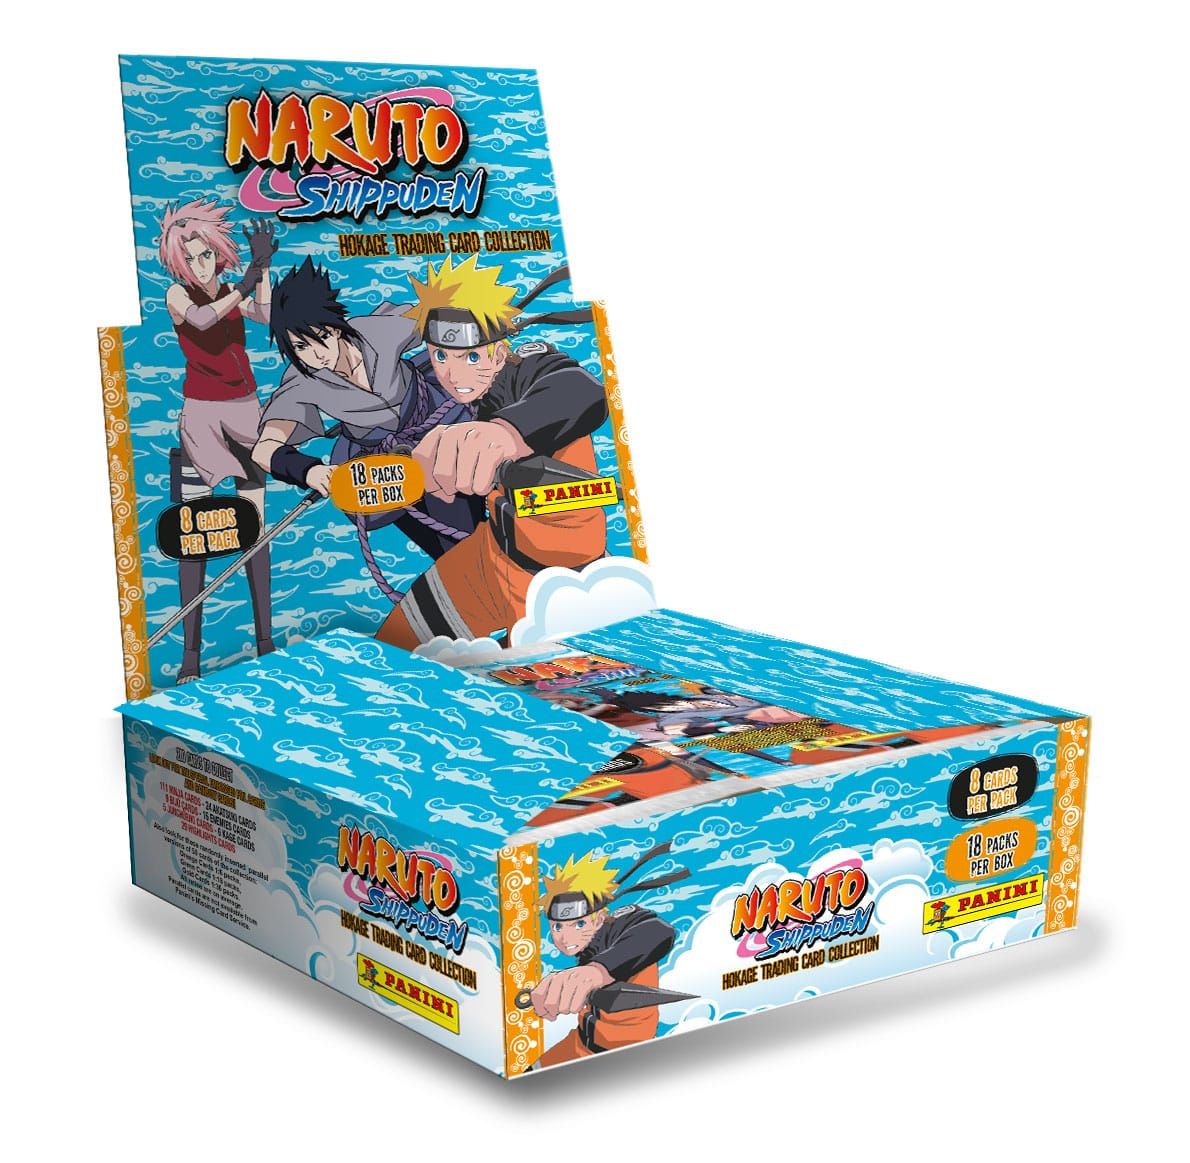 Naruto Shippuden Hokage Trading Card Collection Flow Packs Display (18) *English Version* Panini